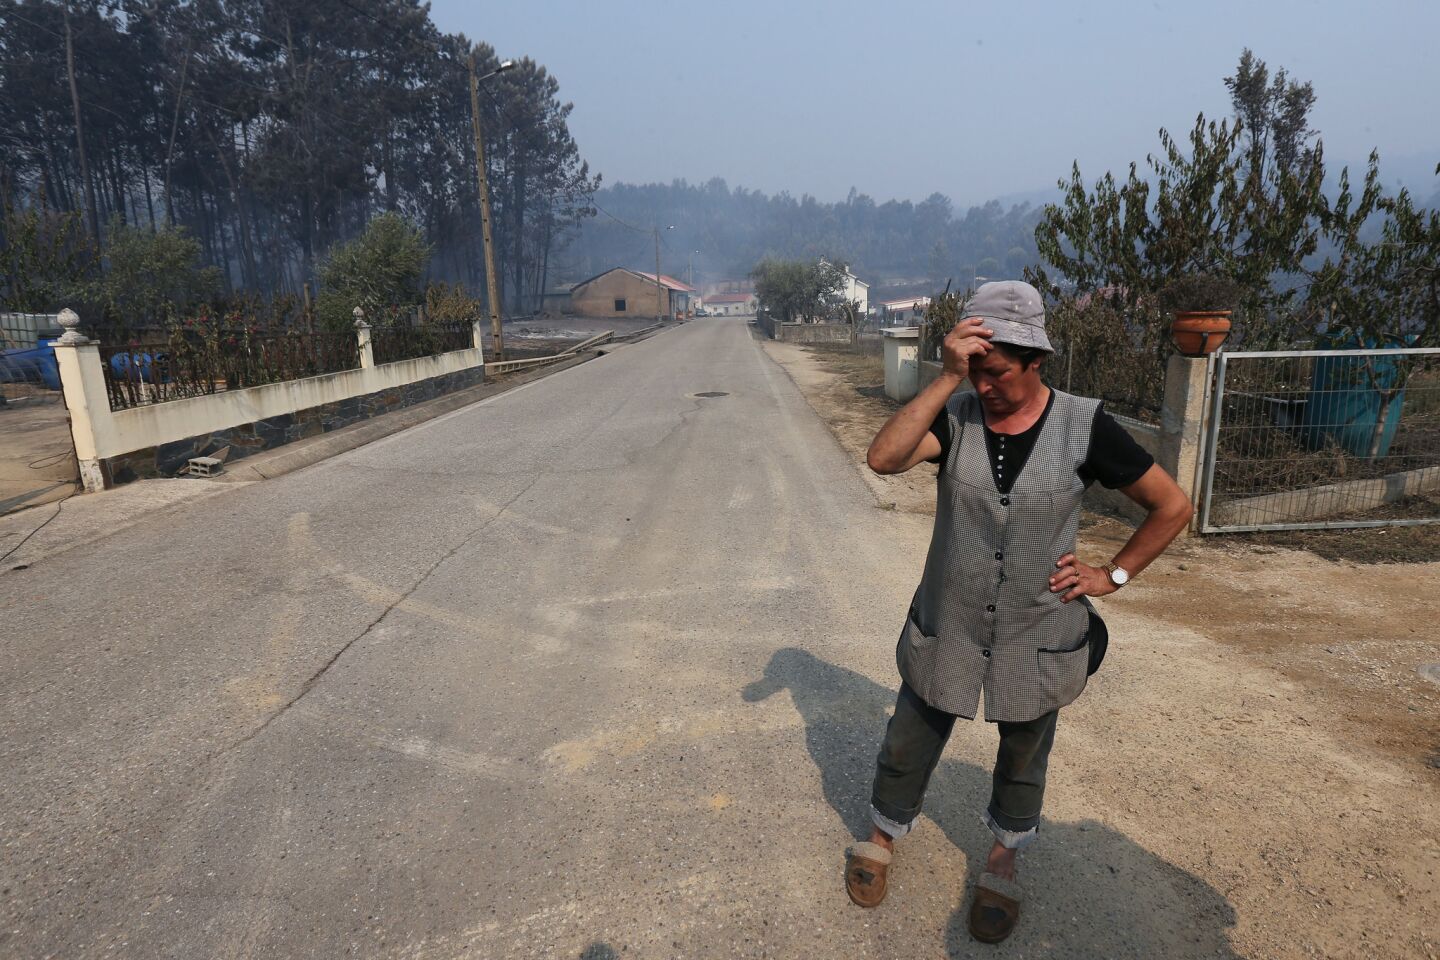 A resident of Barraca da Boavista, near Pedrogao Grande, despairs as fires rage.